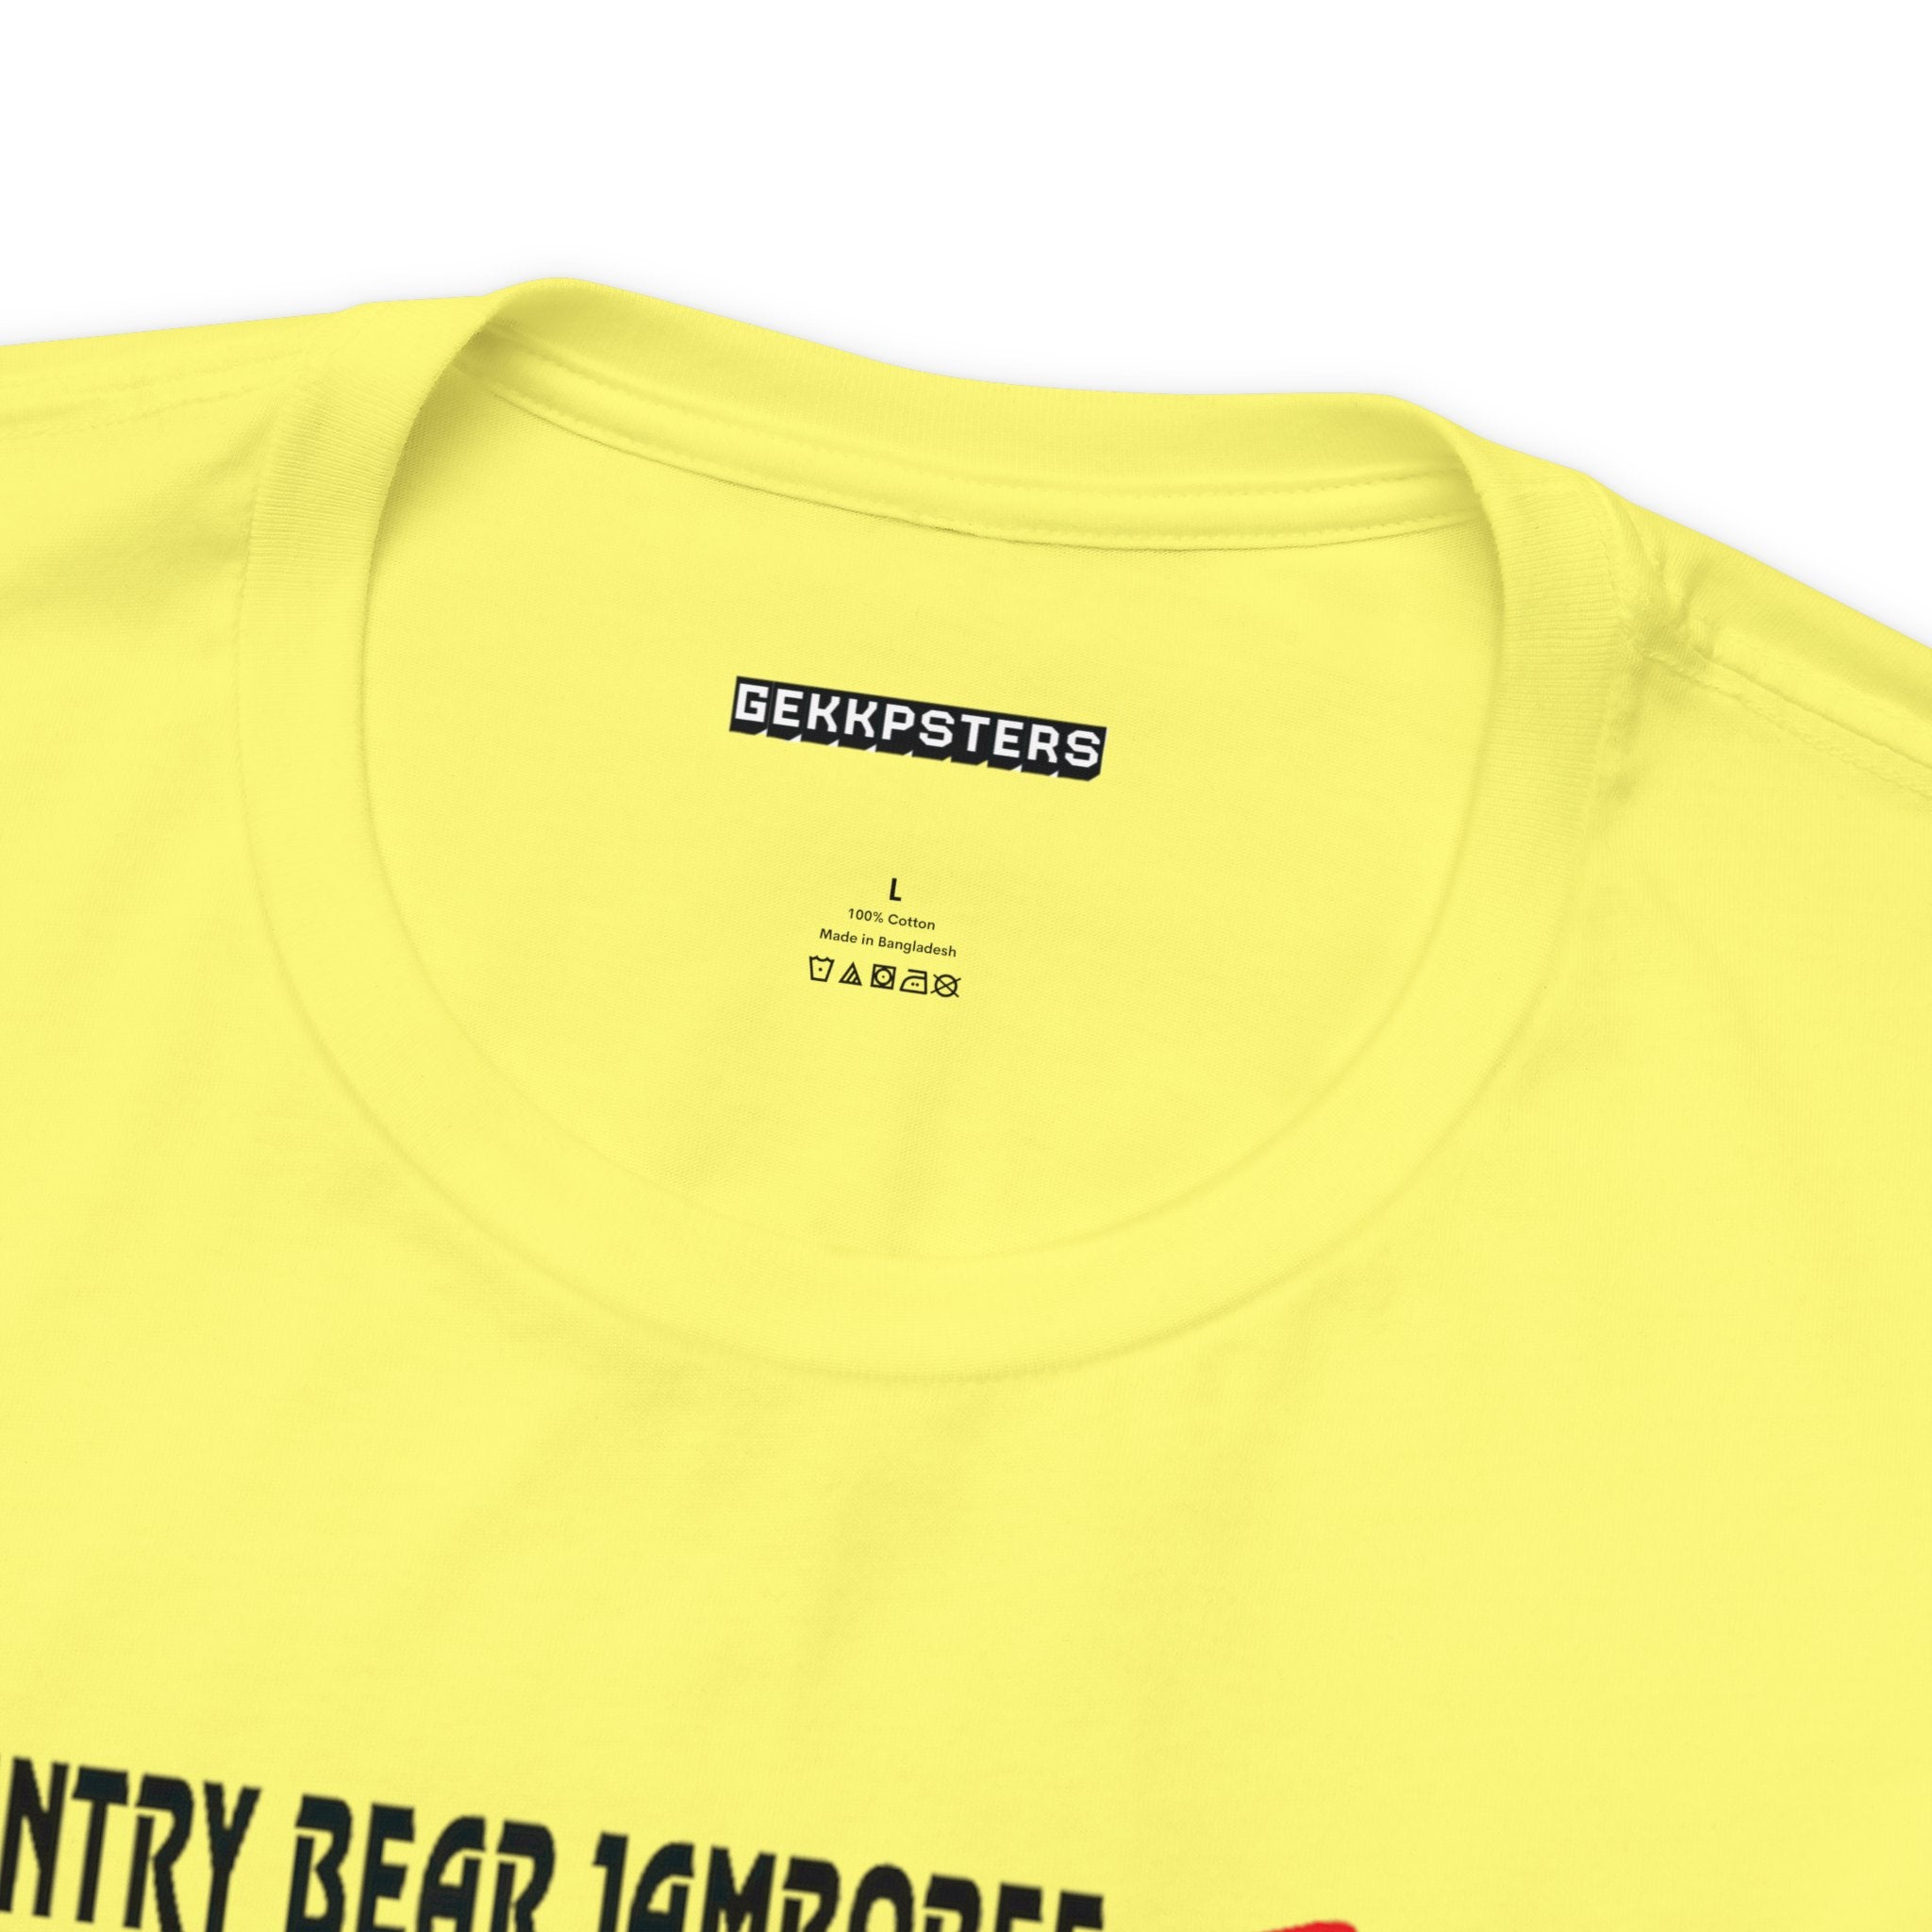 A yellow Country Bear Jamboree Real Old Country Rhythm Five Bear Rugs tee-shirt.